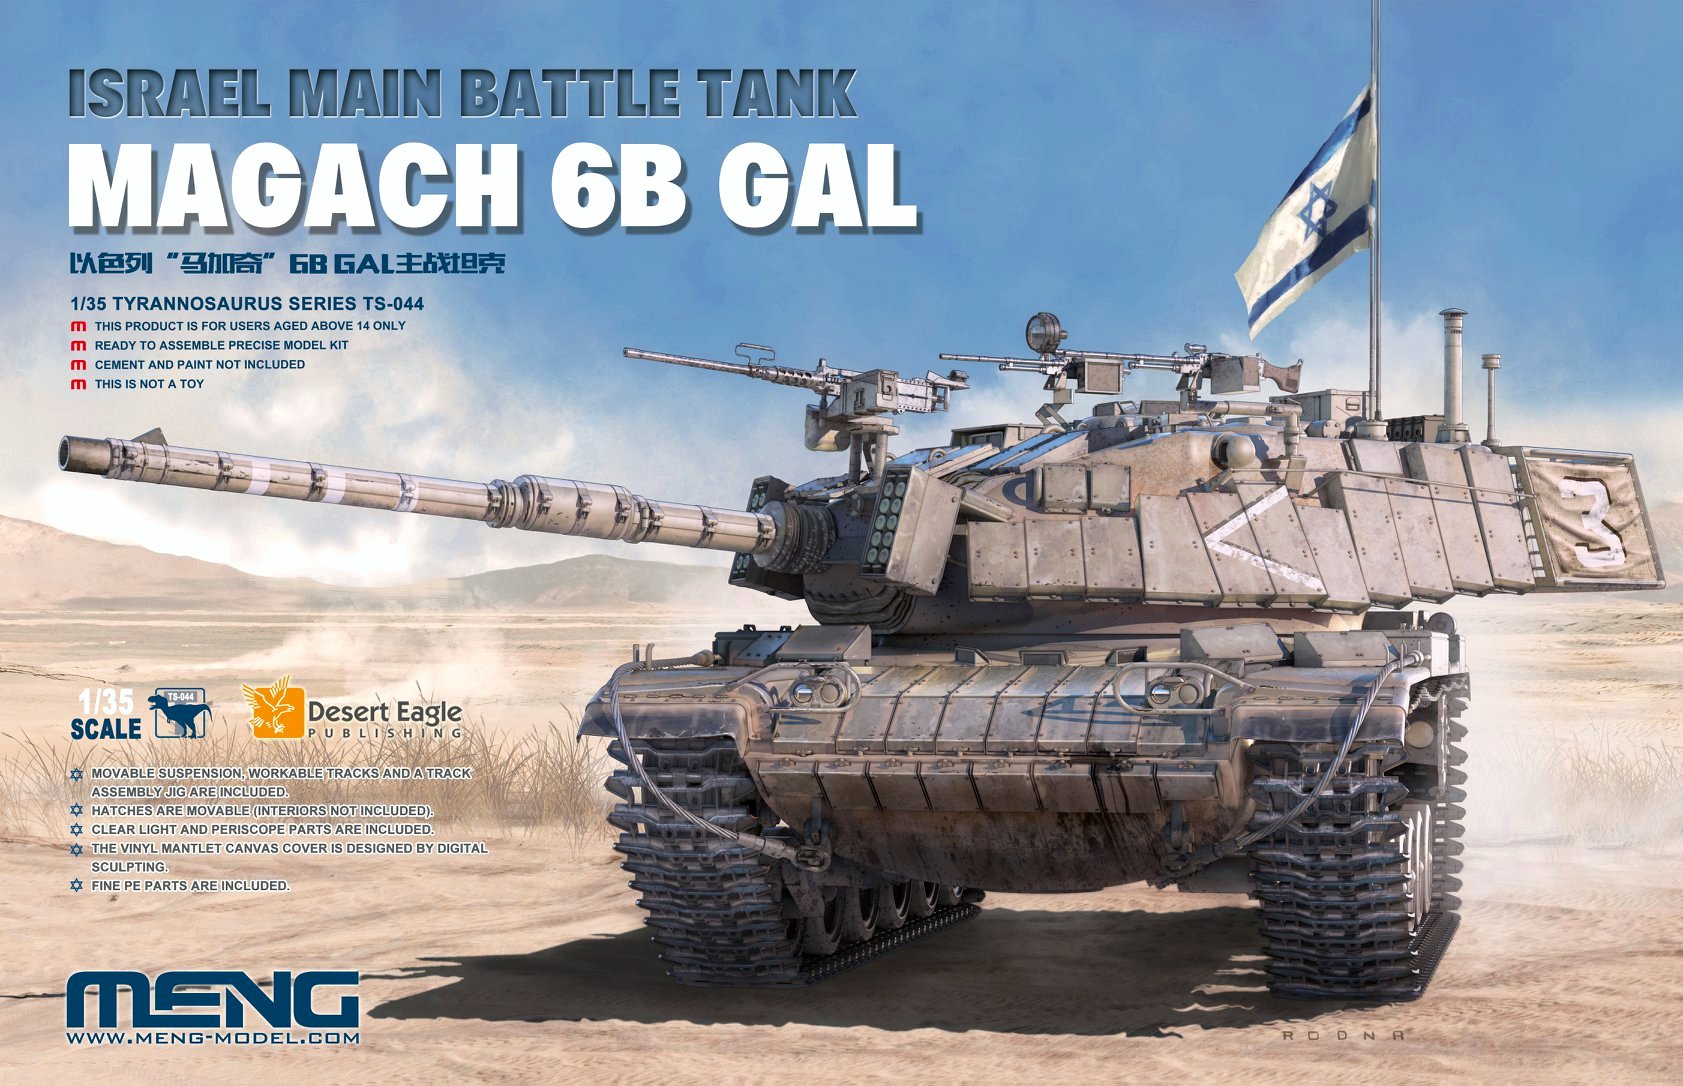 Israel Main Battle Tank MAGACH 6B GAL